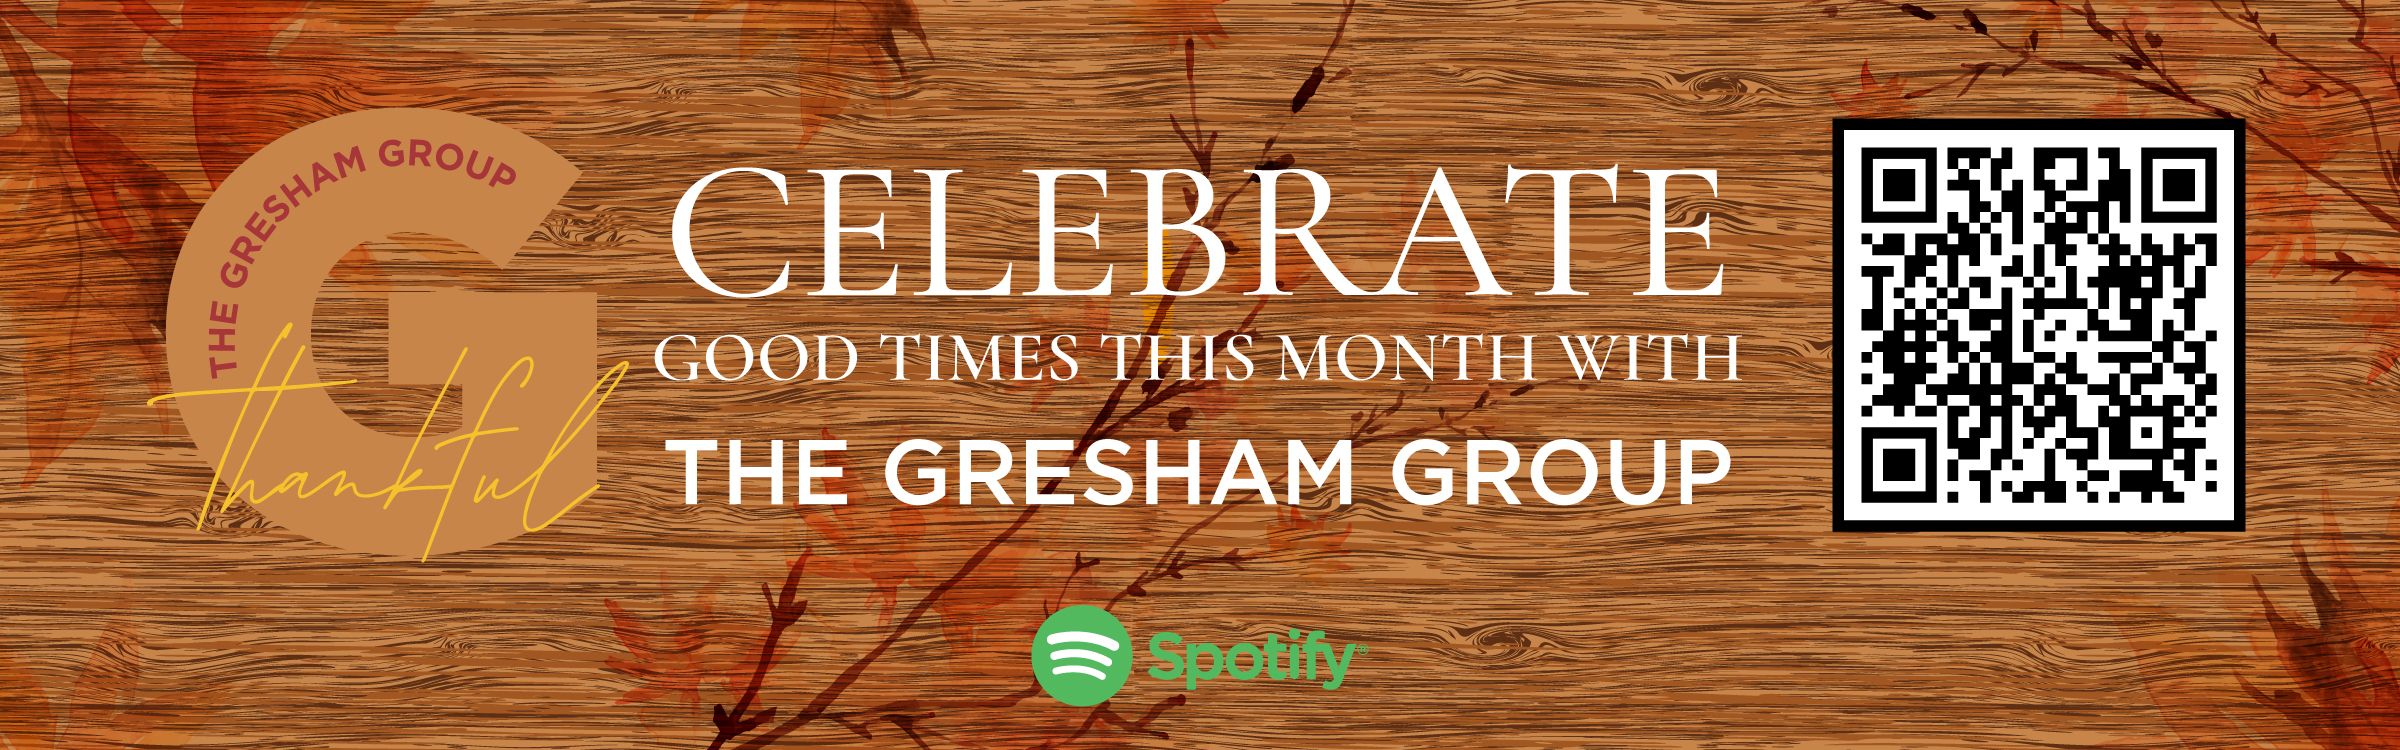 The Gresham Group Spotify